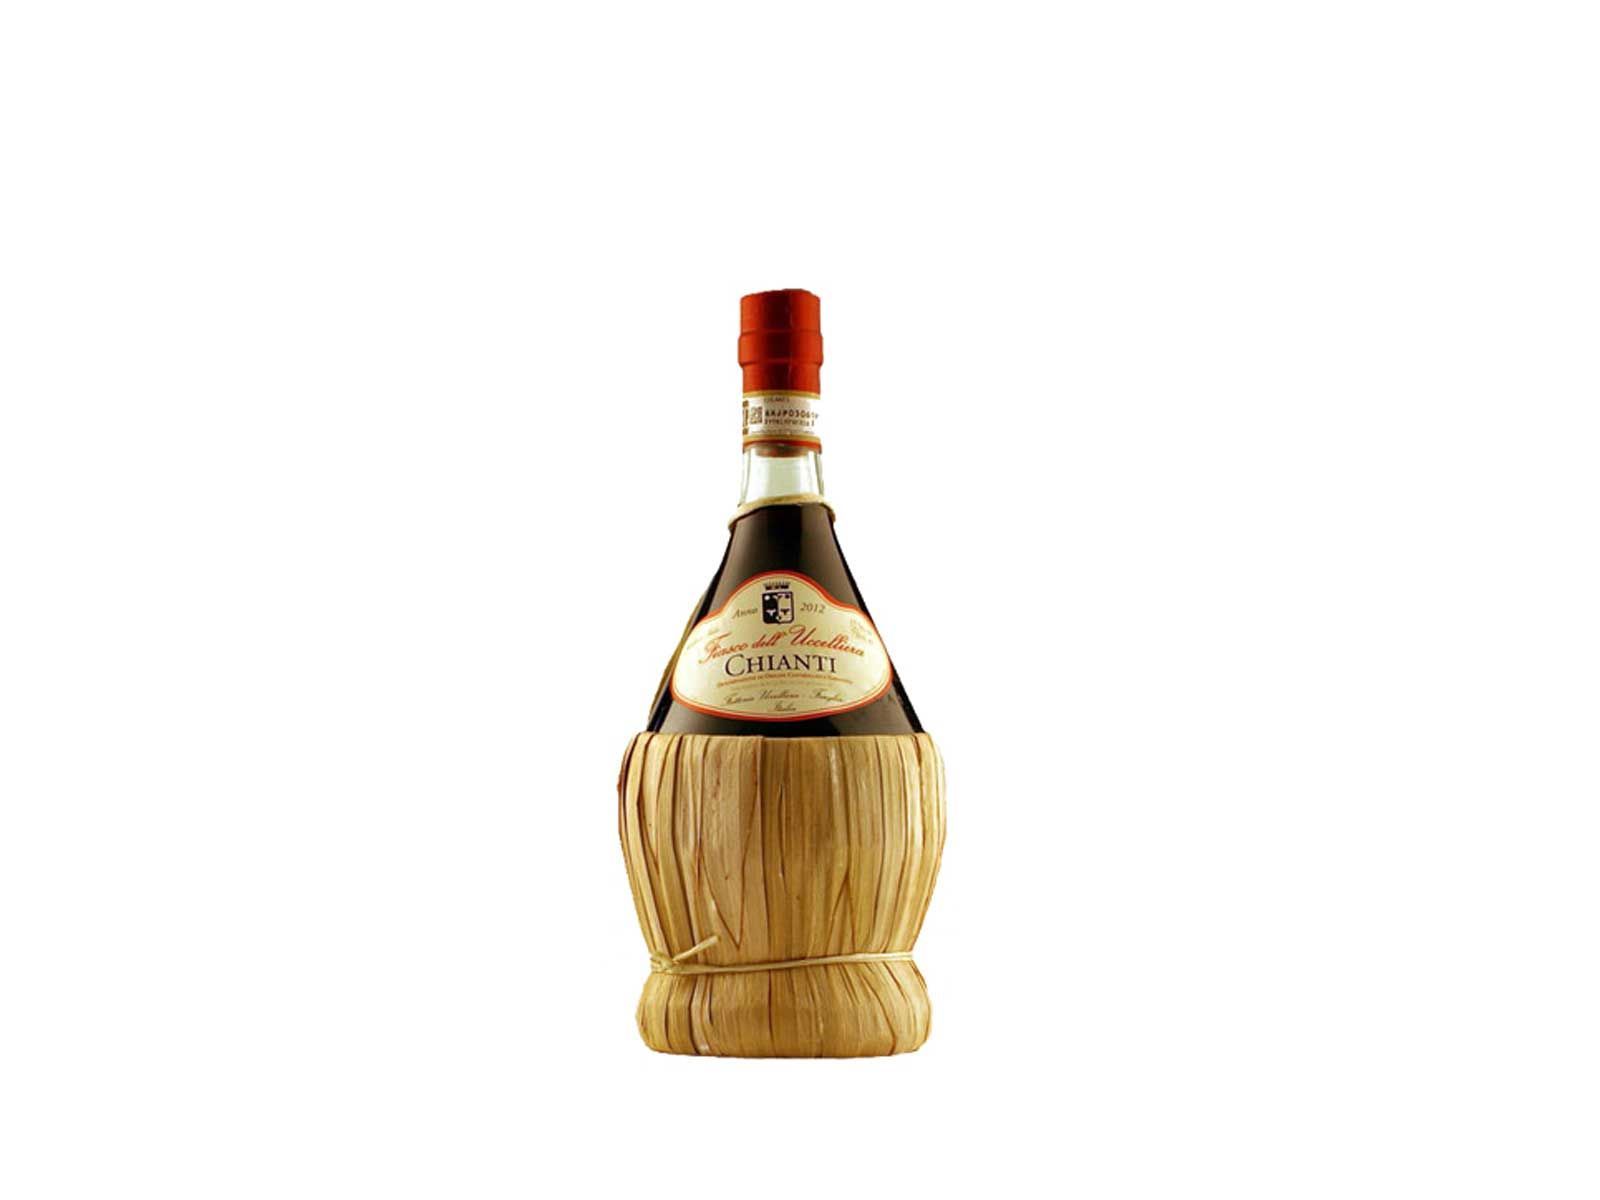 Tuscan red wine Chianti DOCG 6 bottles